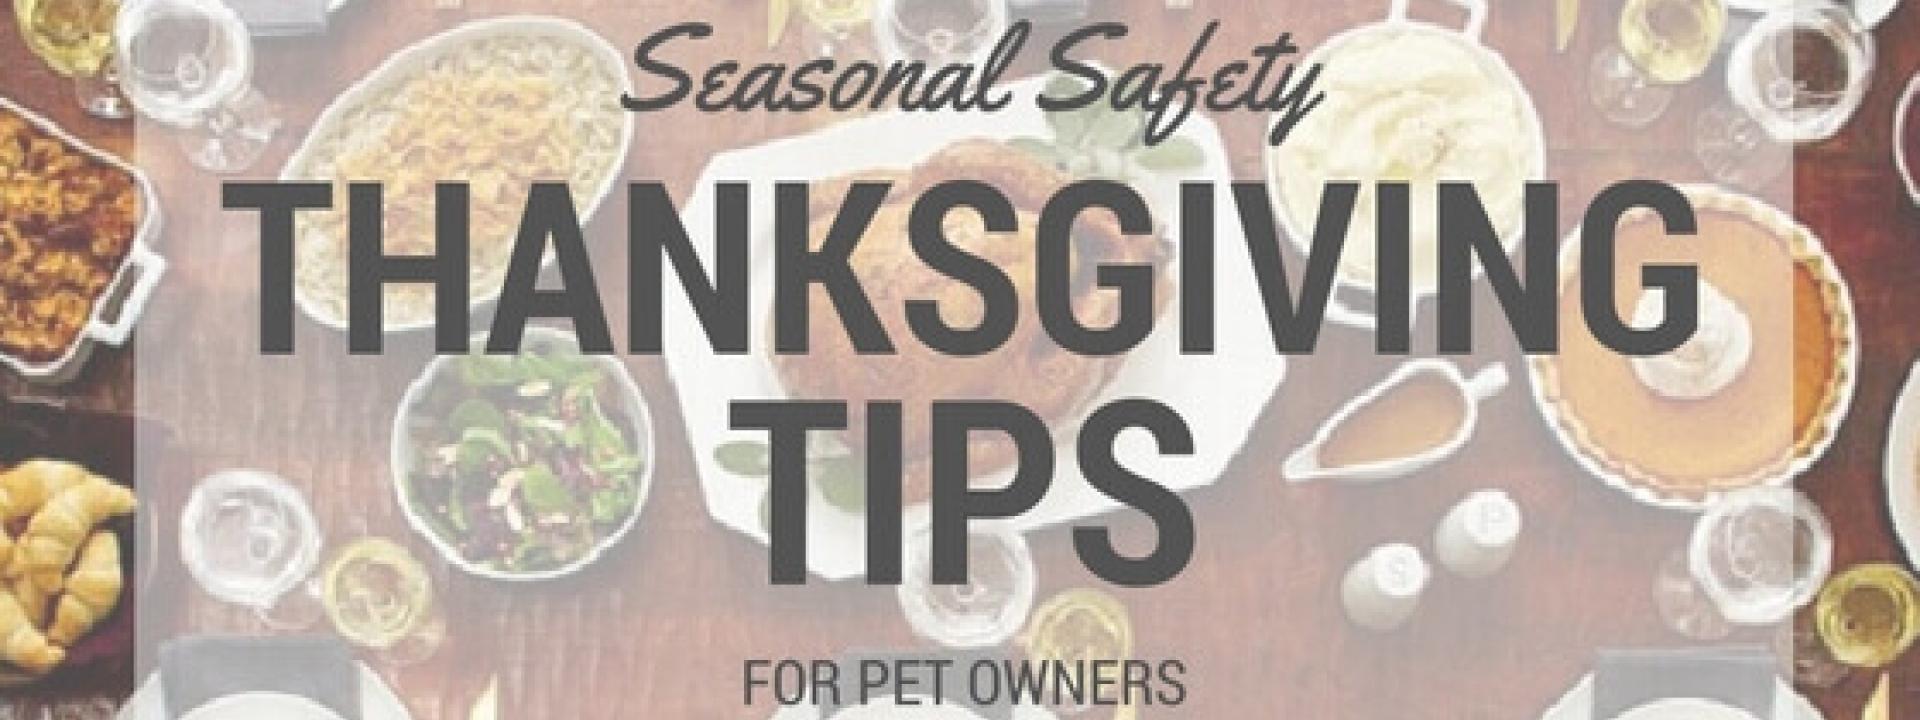 Thanksgiving-Safety-Tips.jpg